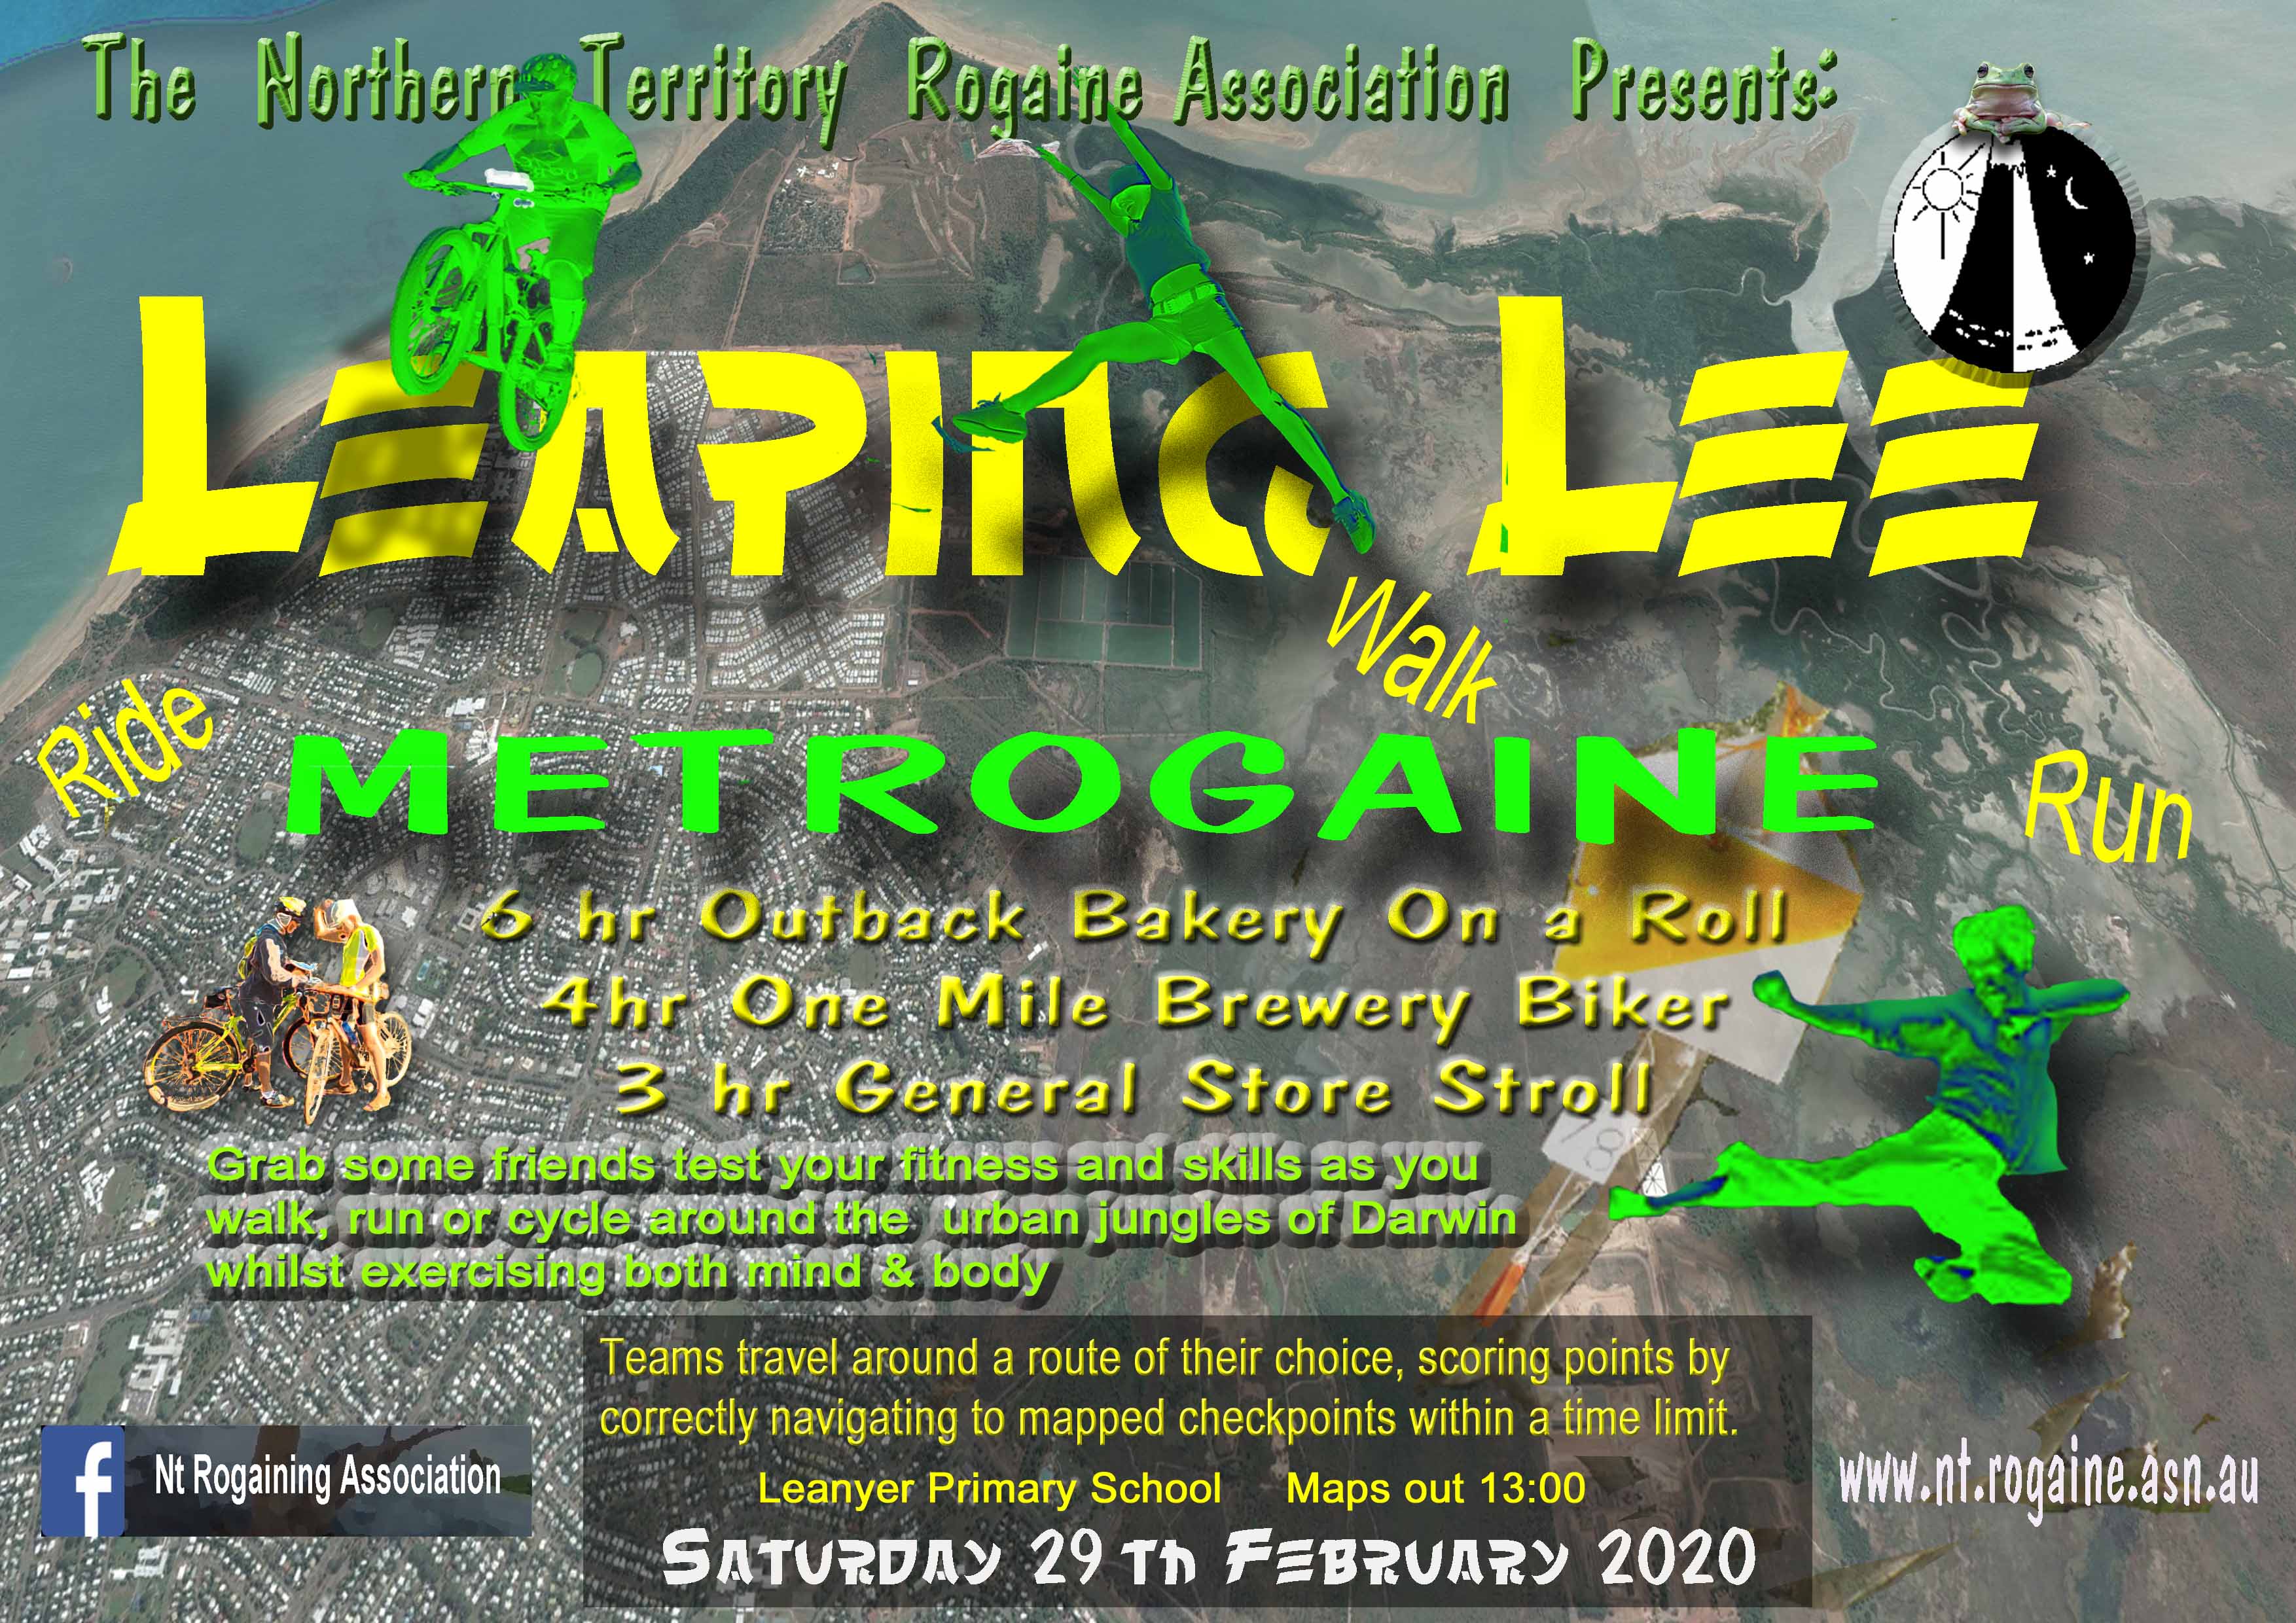 Leaping Lee Metrogaine